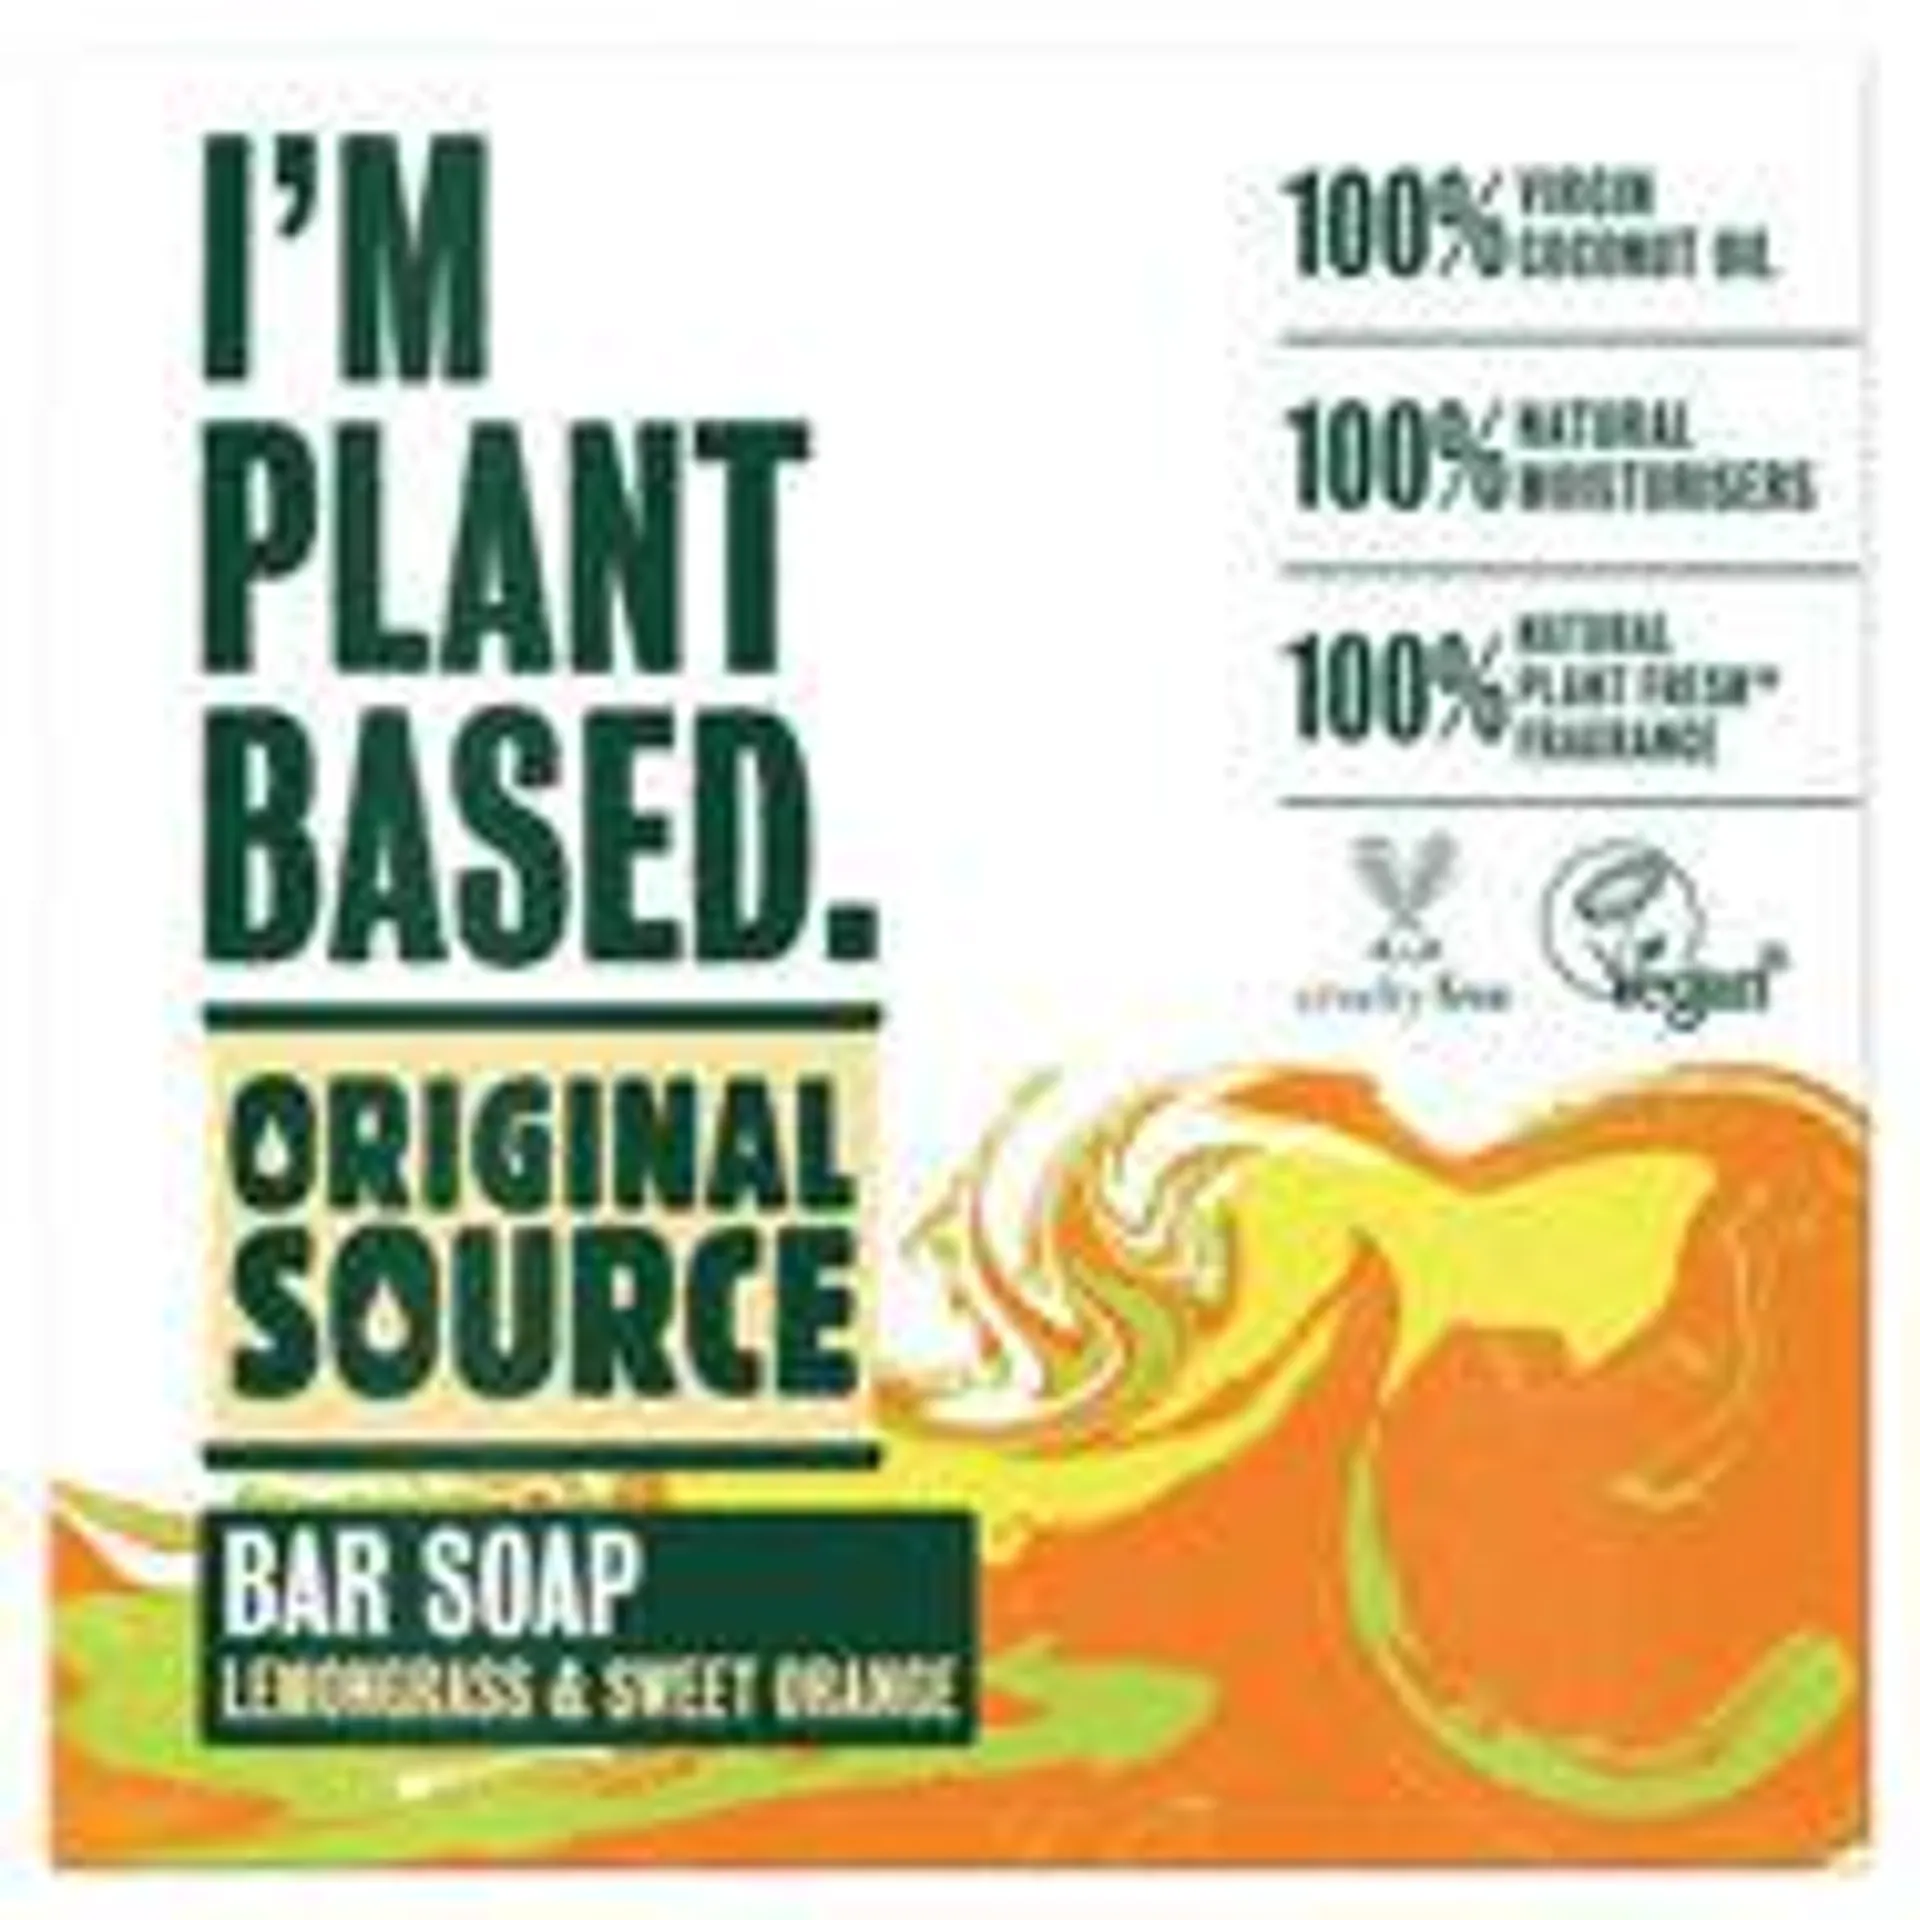 Original Source Bar Soap Lemongrass & Sweet Orange